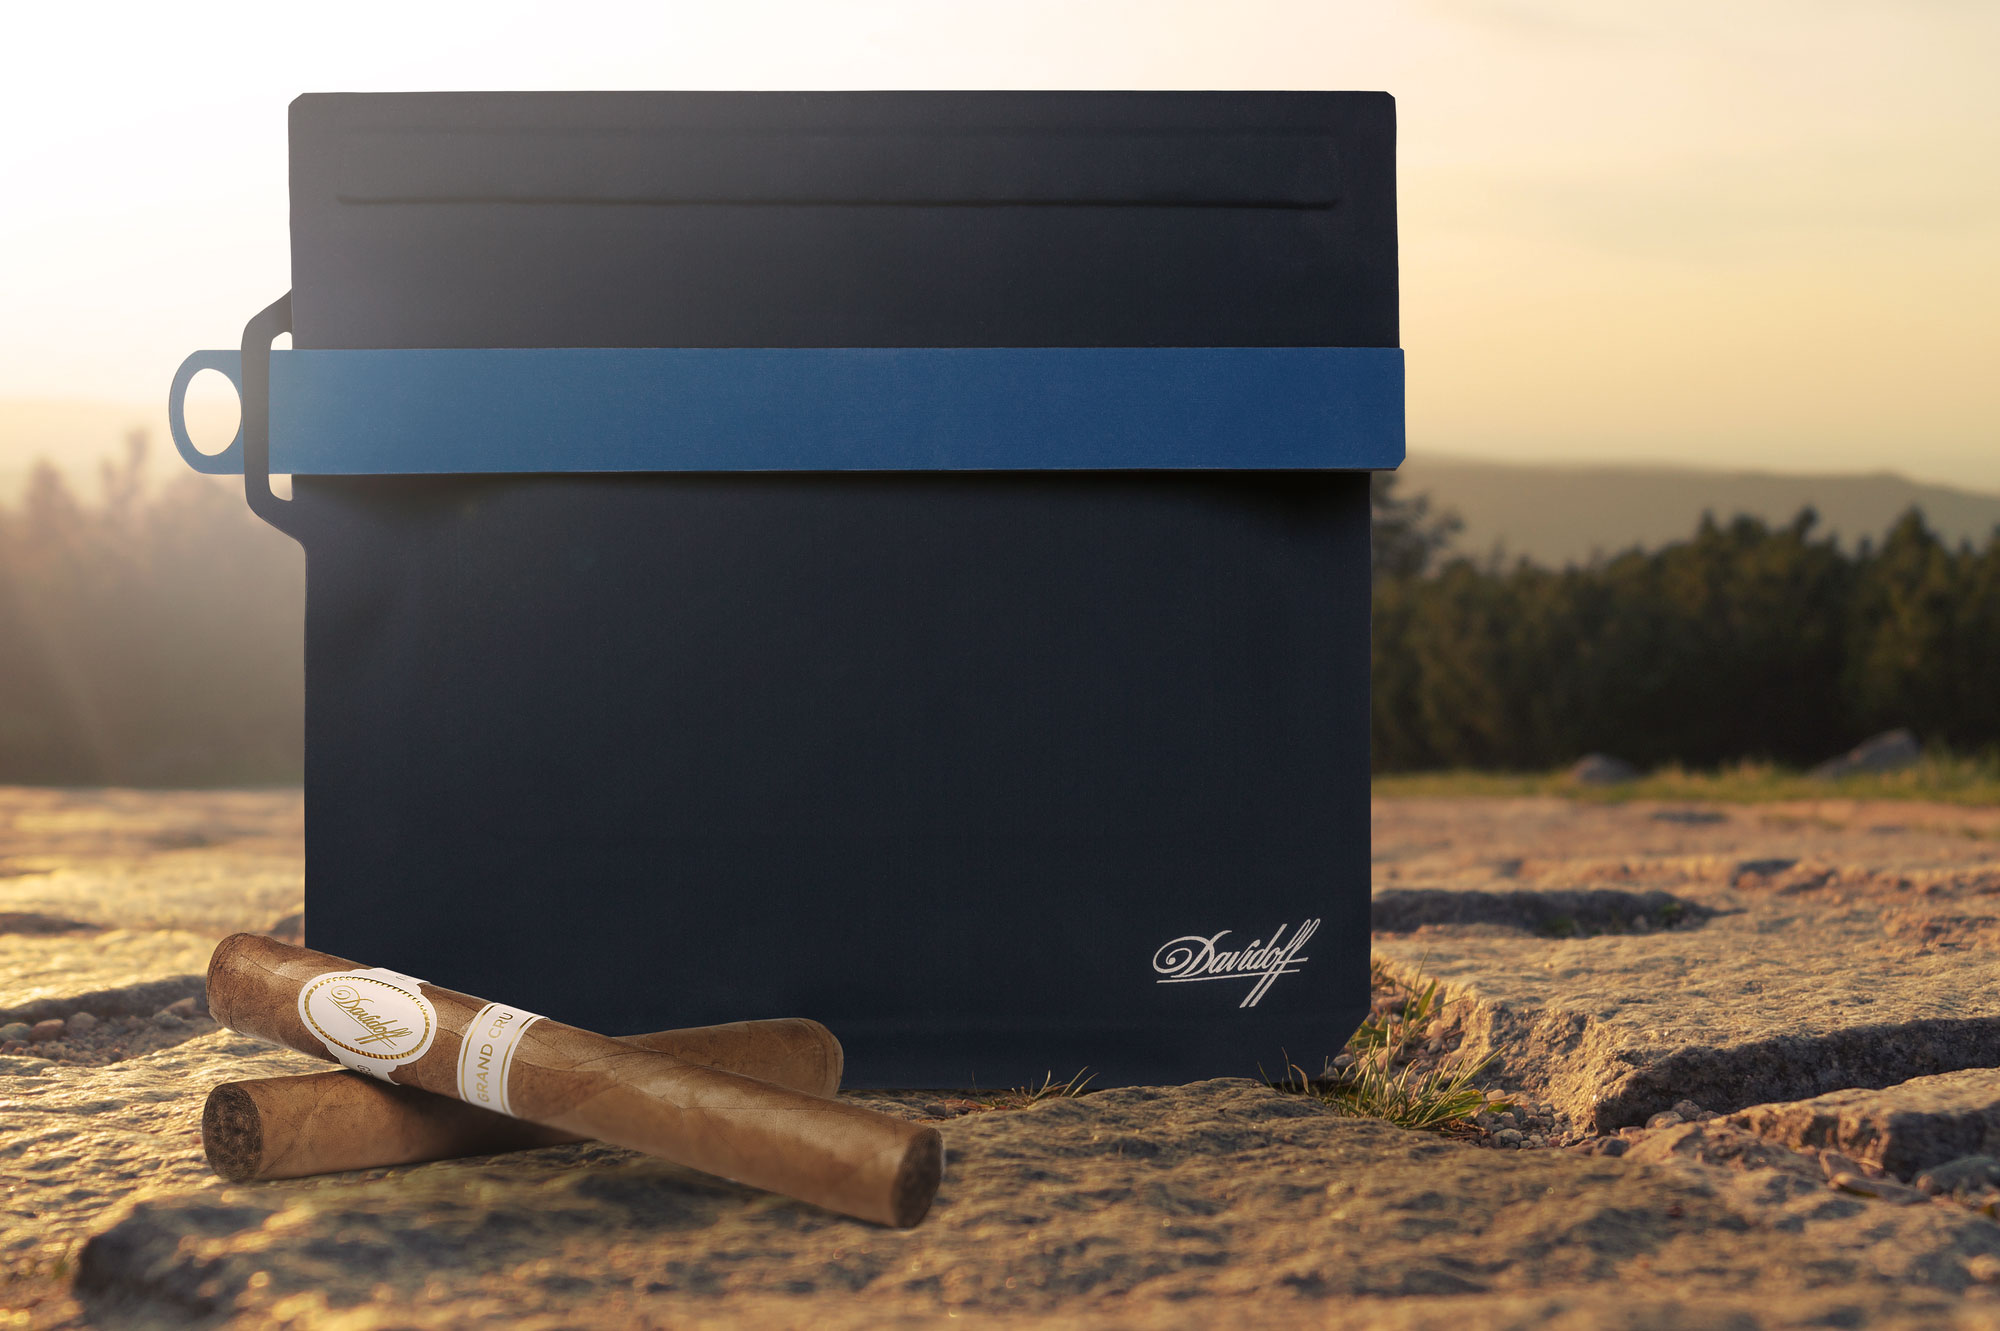 Portable cigar humidor, the Davidoff Travel Humidor for explorer